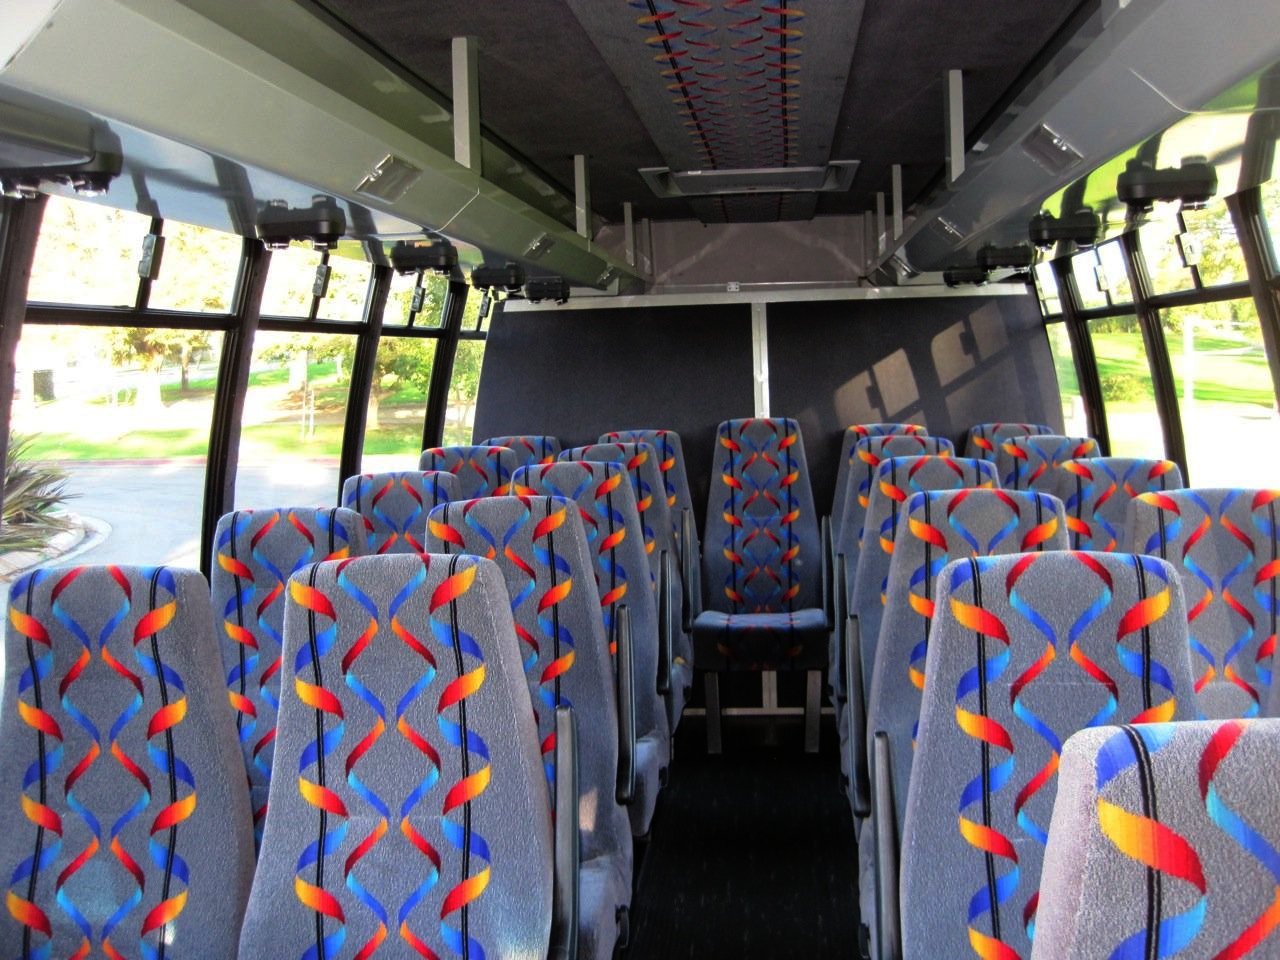 Coach bus interior